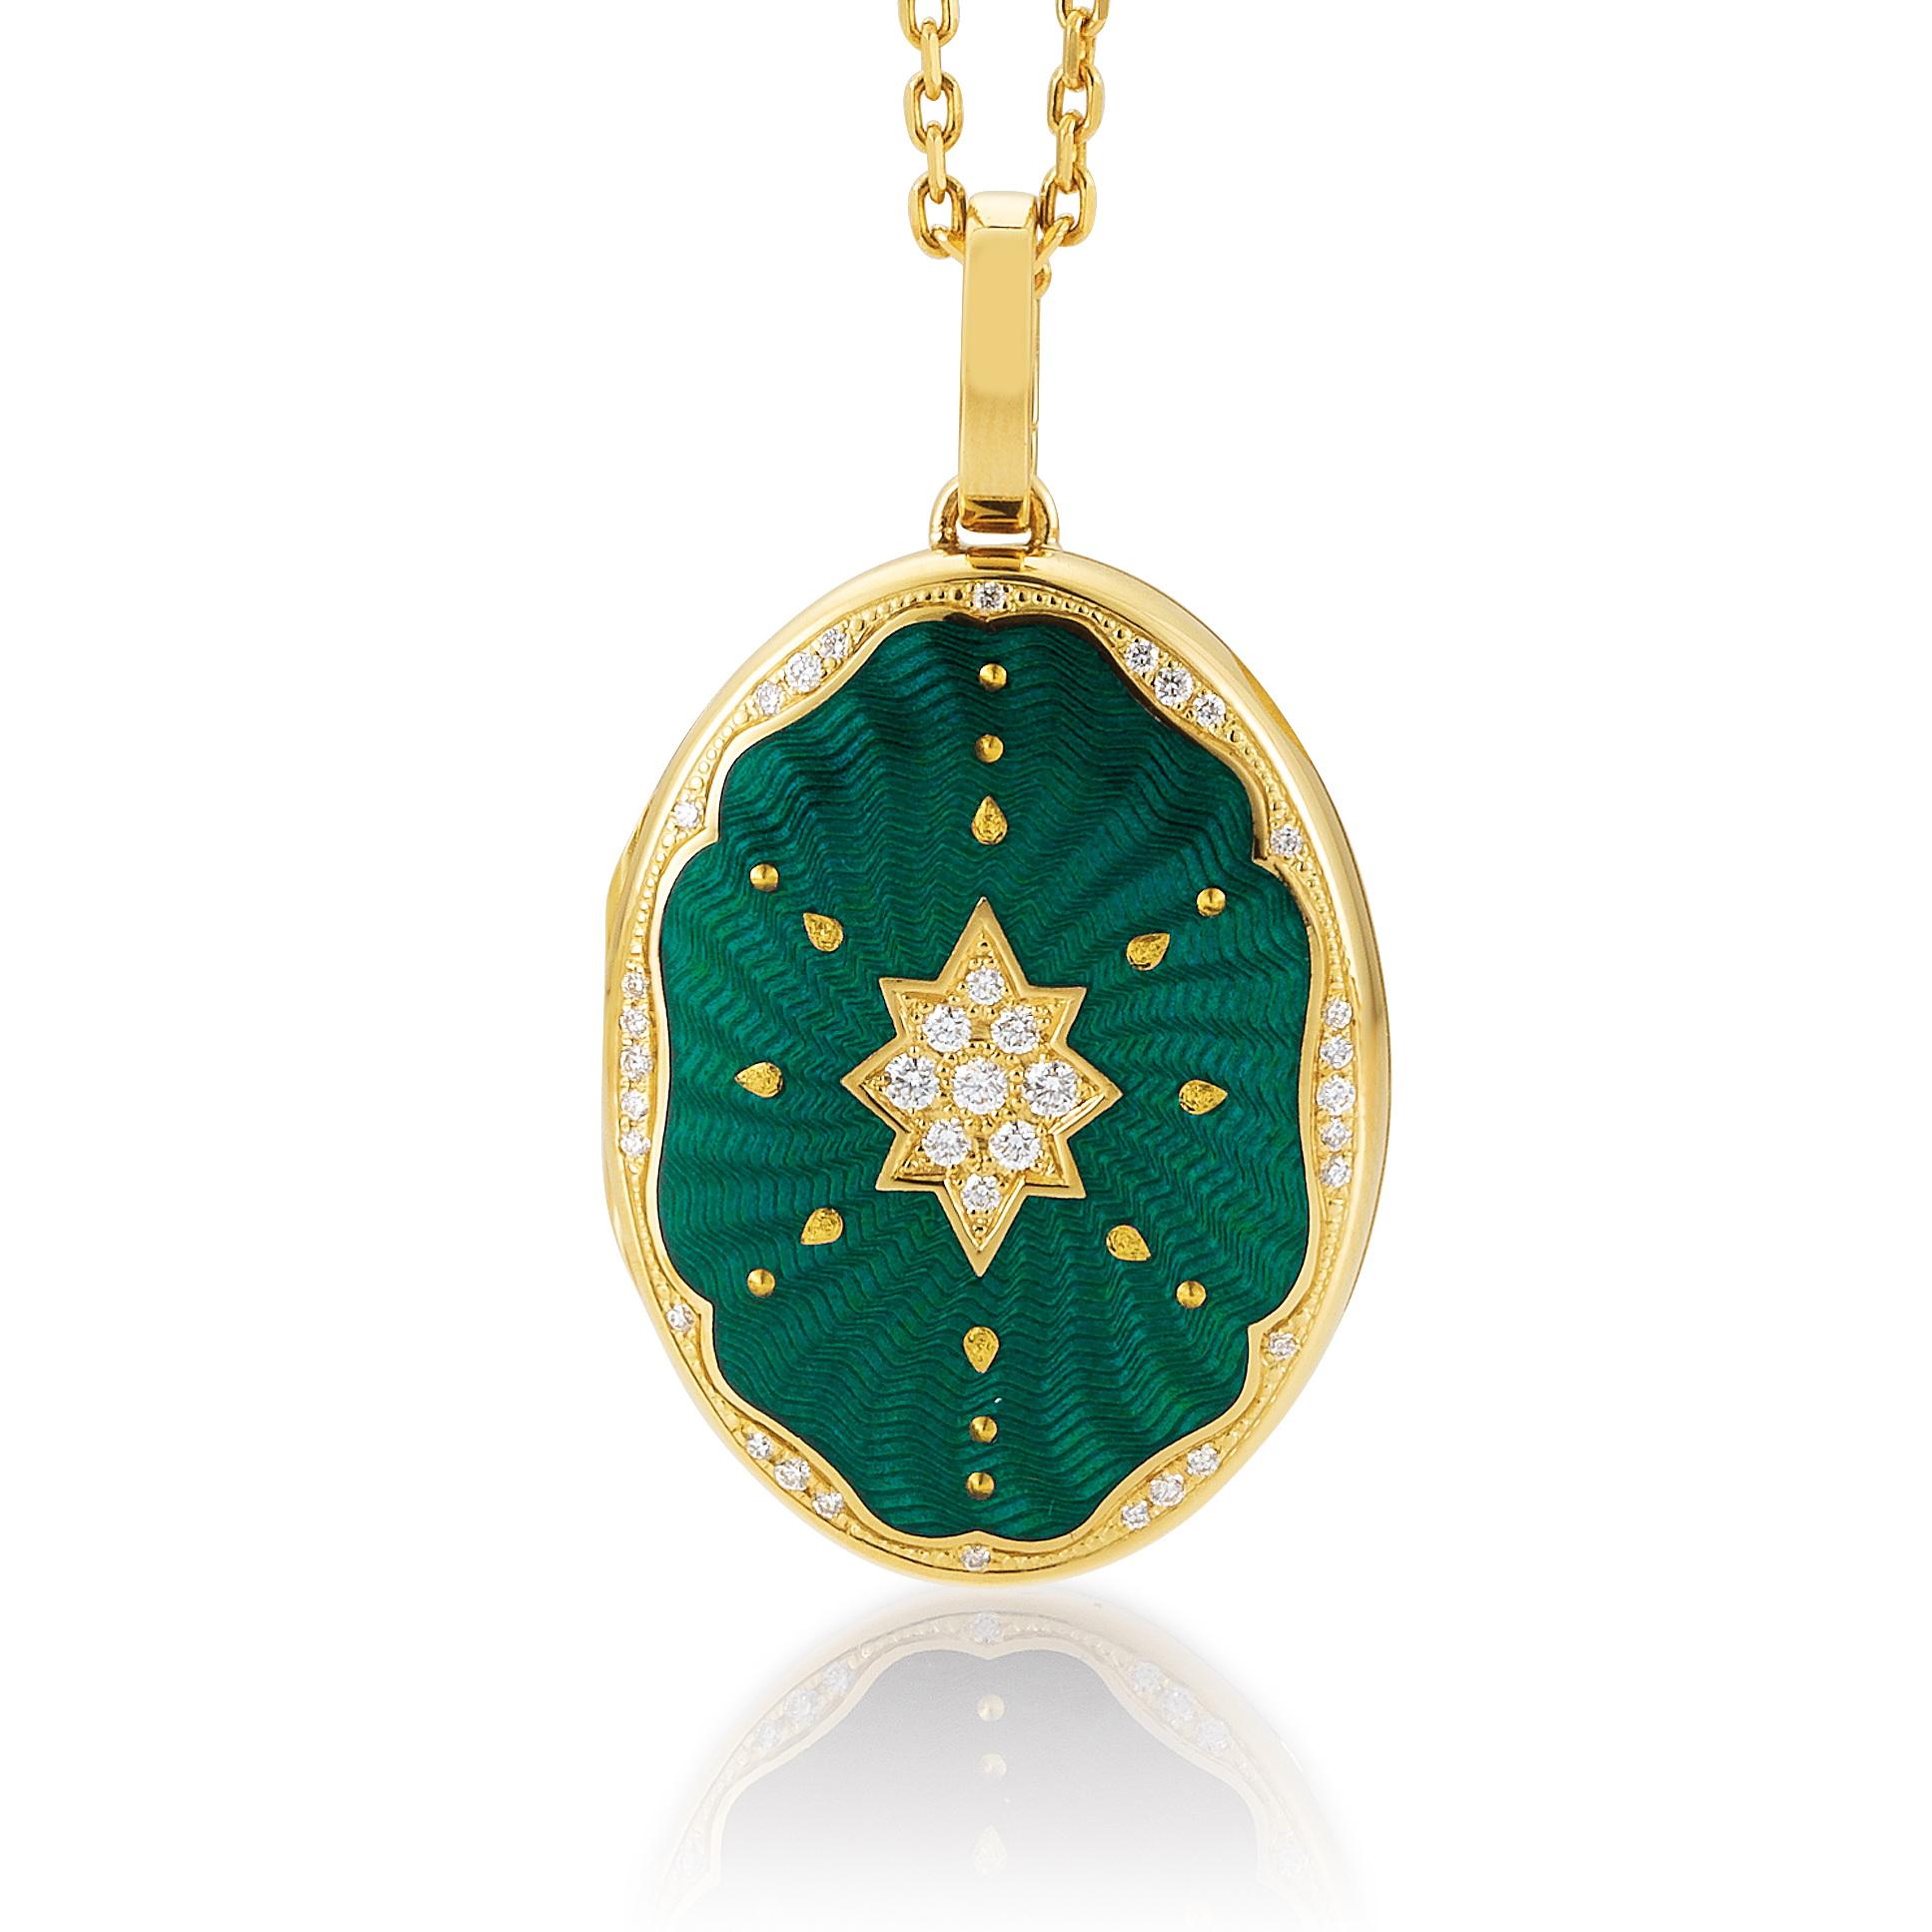 Oval Locket Pendant Necklace 18k Yellow Gold Green Enamel 37 Diamonds 0.29 ct In New Condition For Sale In Pforzheim, DE